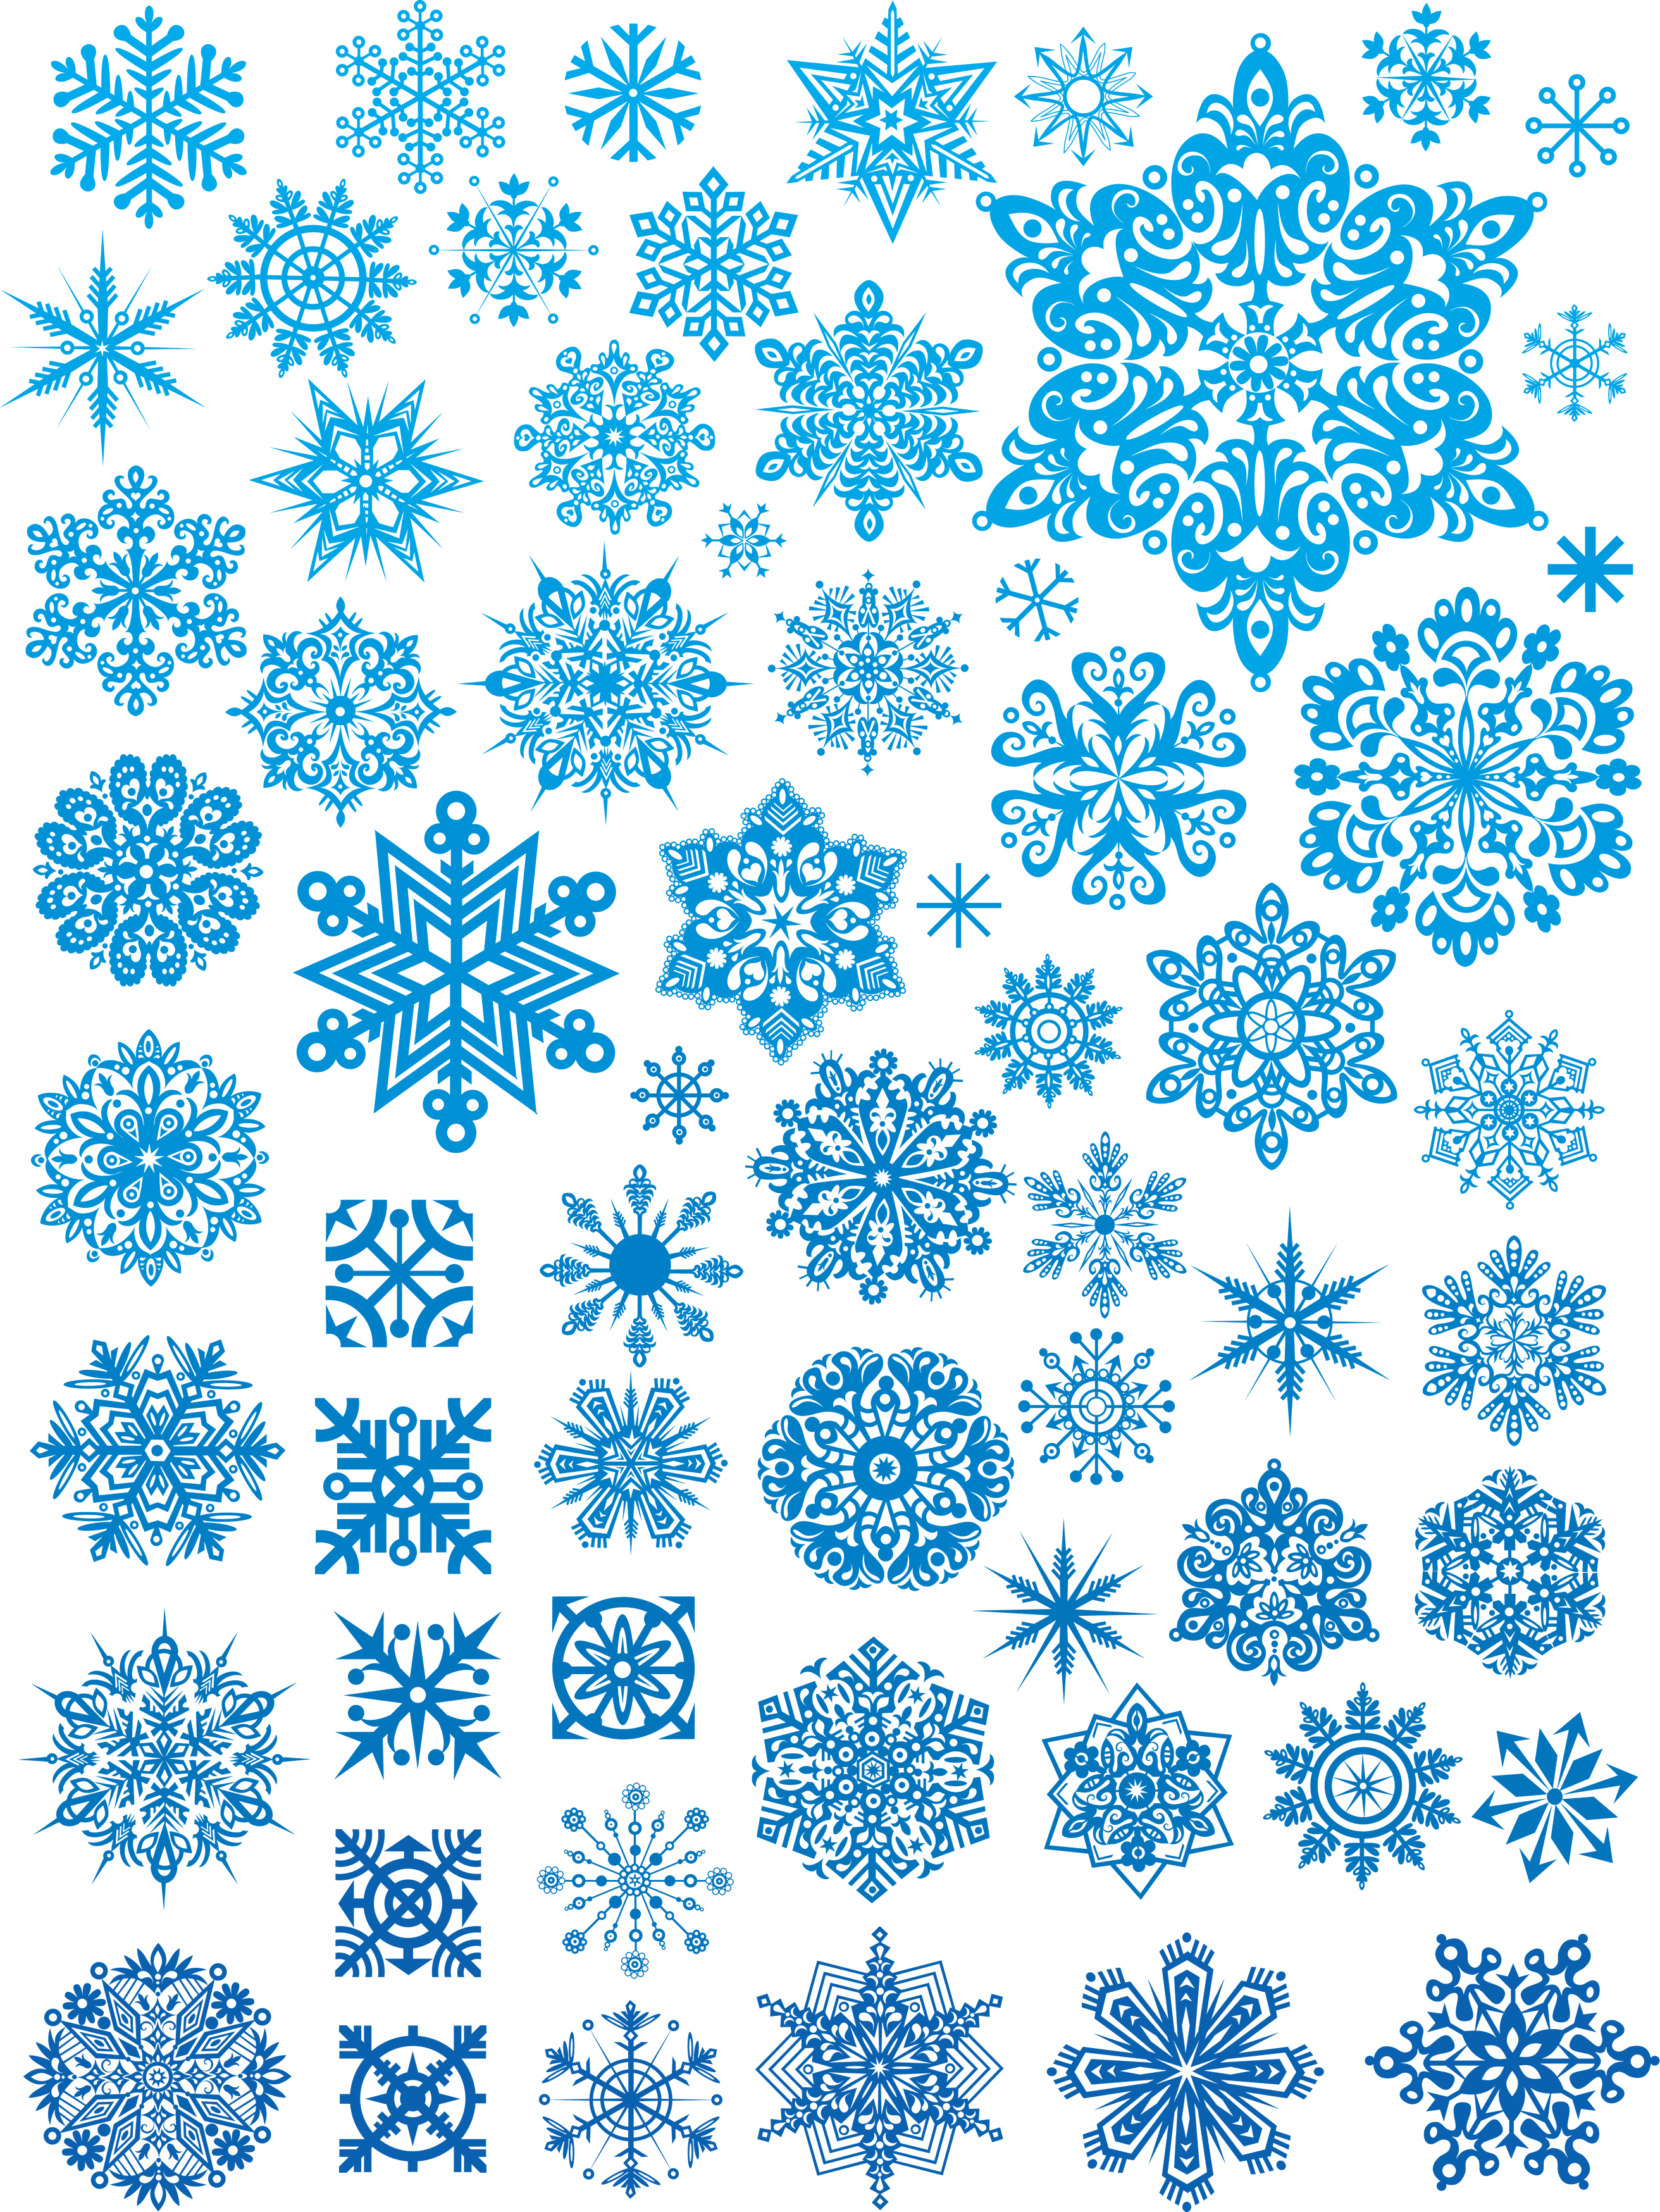 snowflake illustrator free download